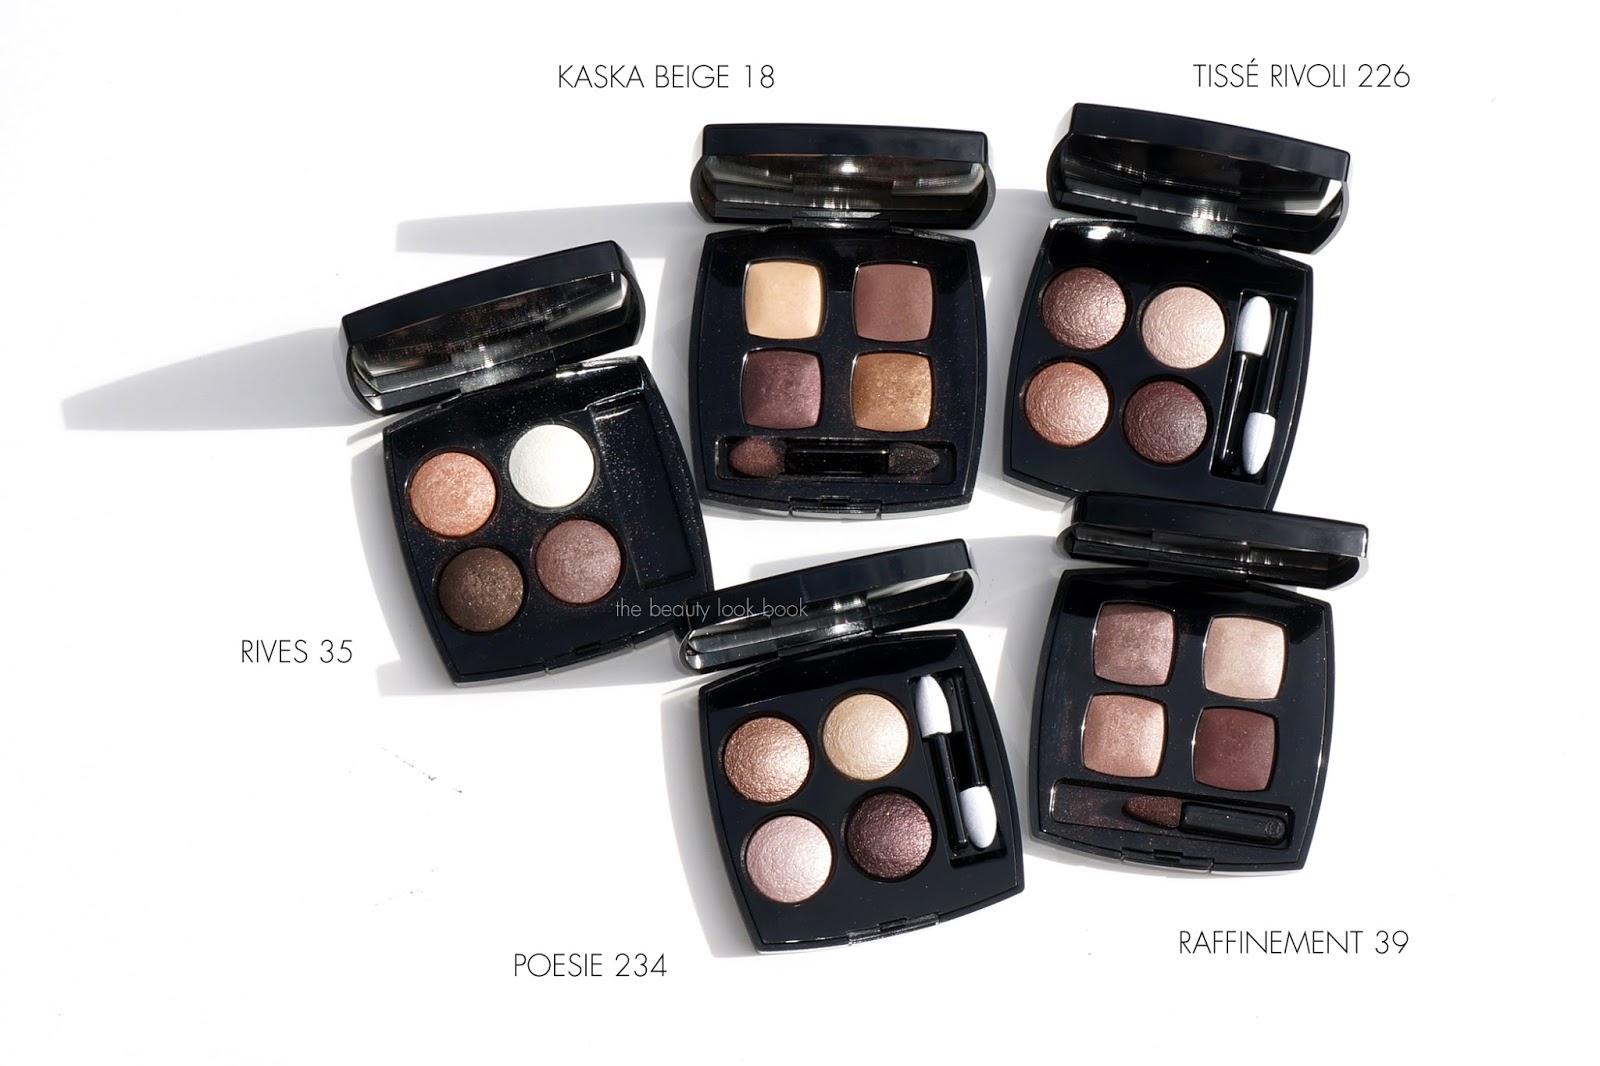 Chanel Les 4 Ombres Multi-Effect Quadra Eyeshadow  Poésie #234 and Tissé  Rivoli #226 - The Beauty Look Book